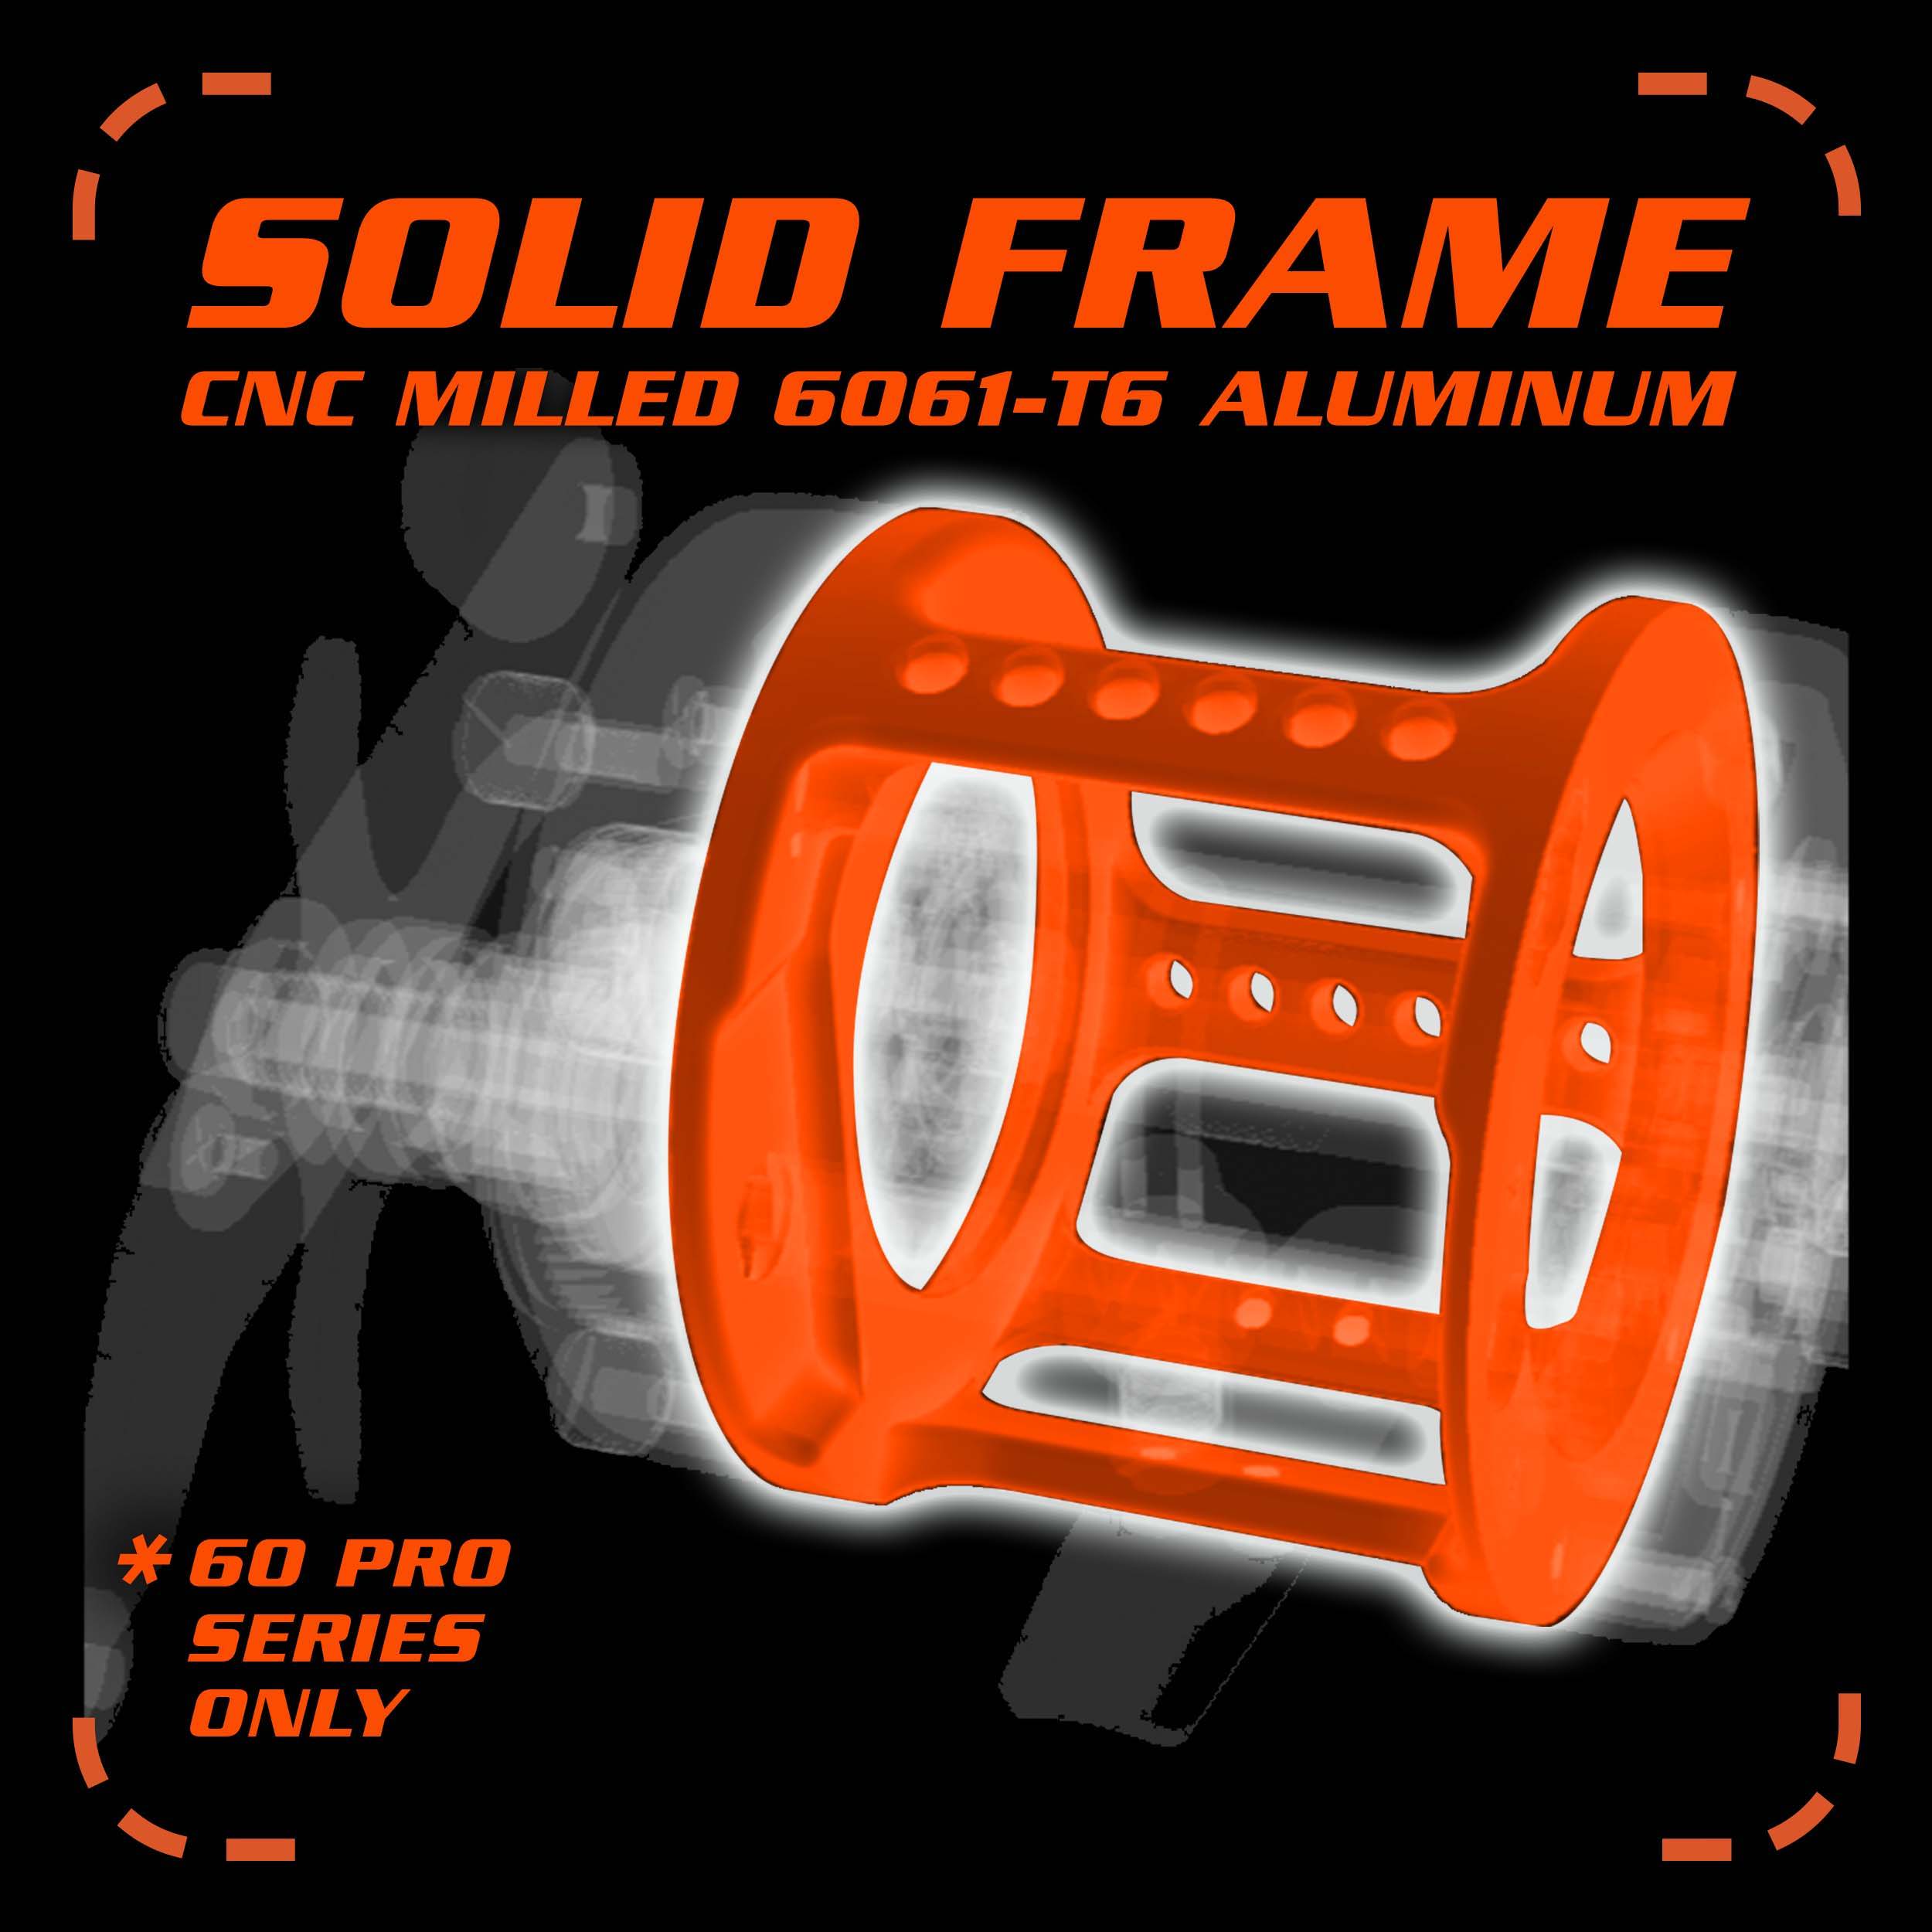 All aluminum one-pece CNC frame